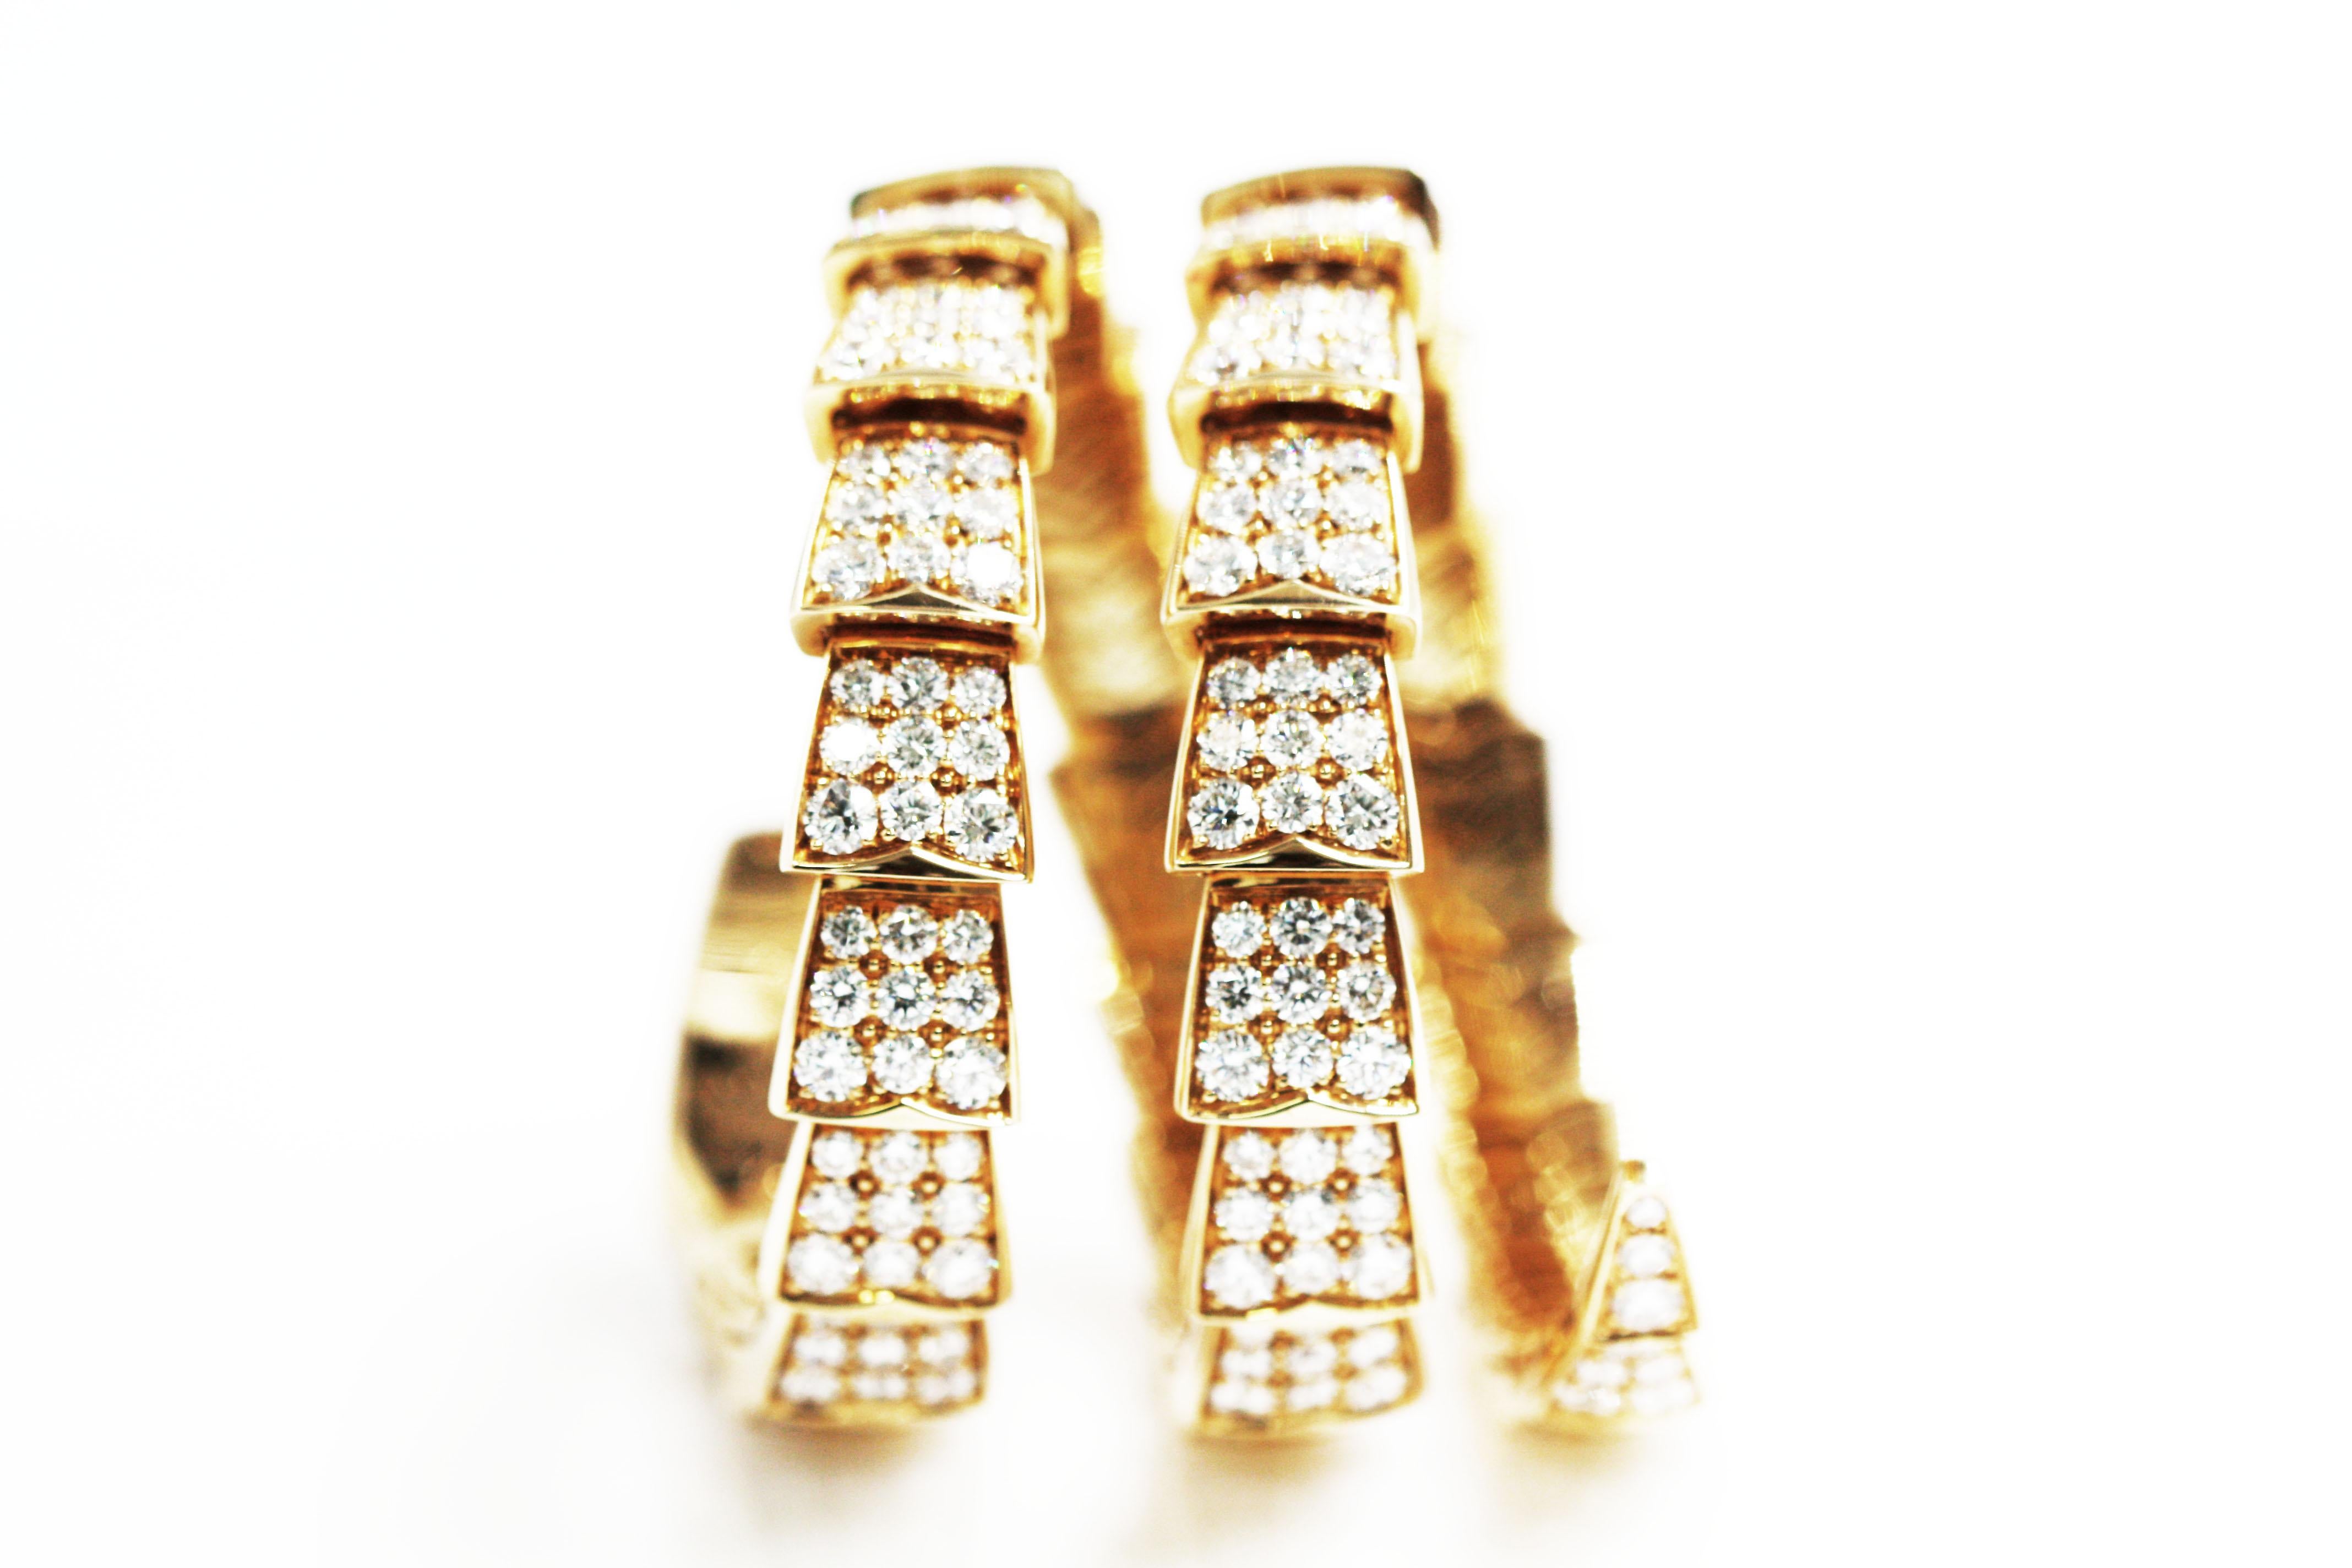 Bvlgari Serpenti Rose Gold Diamonds Jewellery Watch For Sale 2